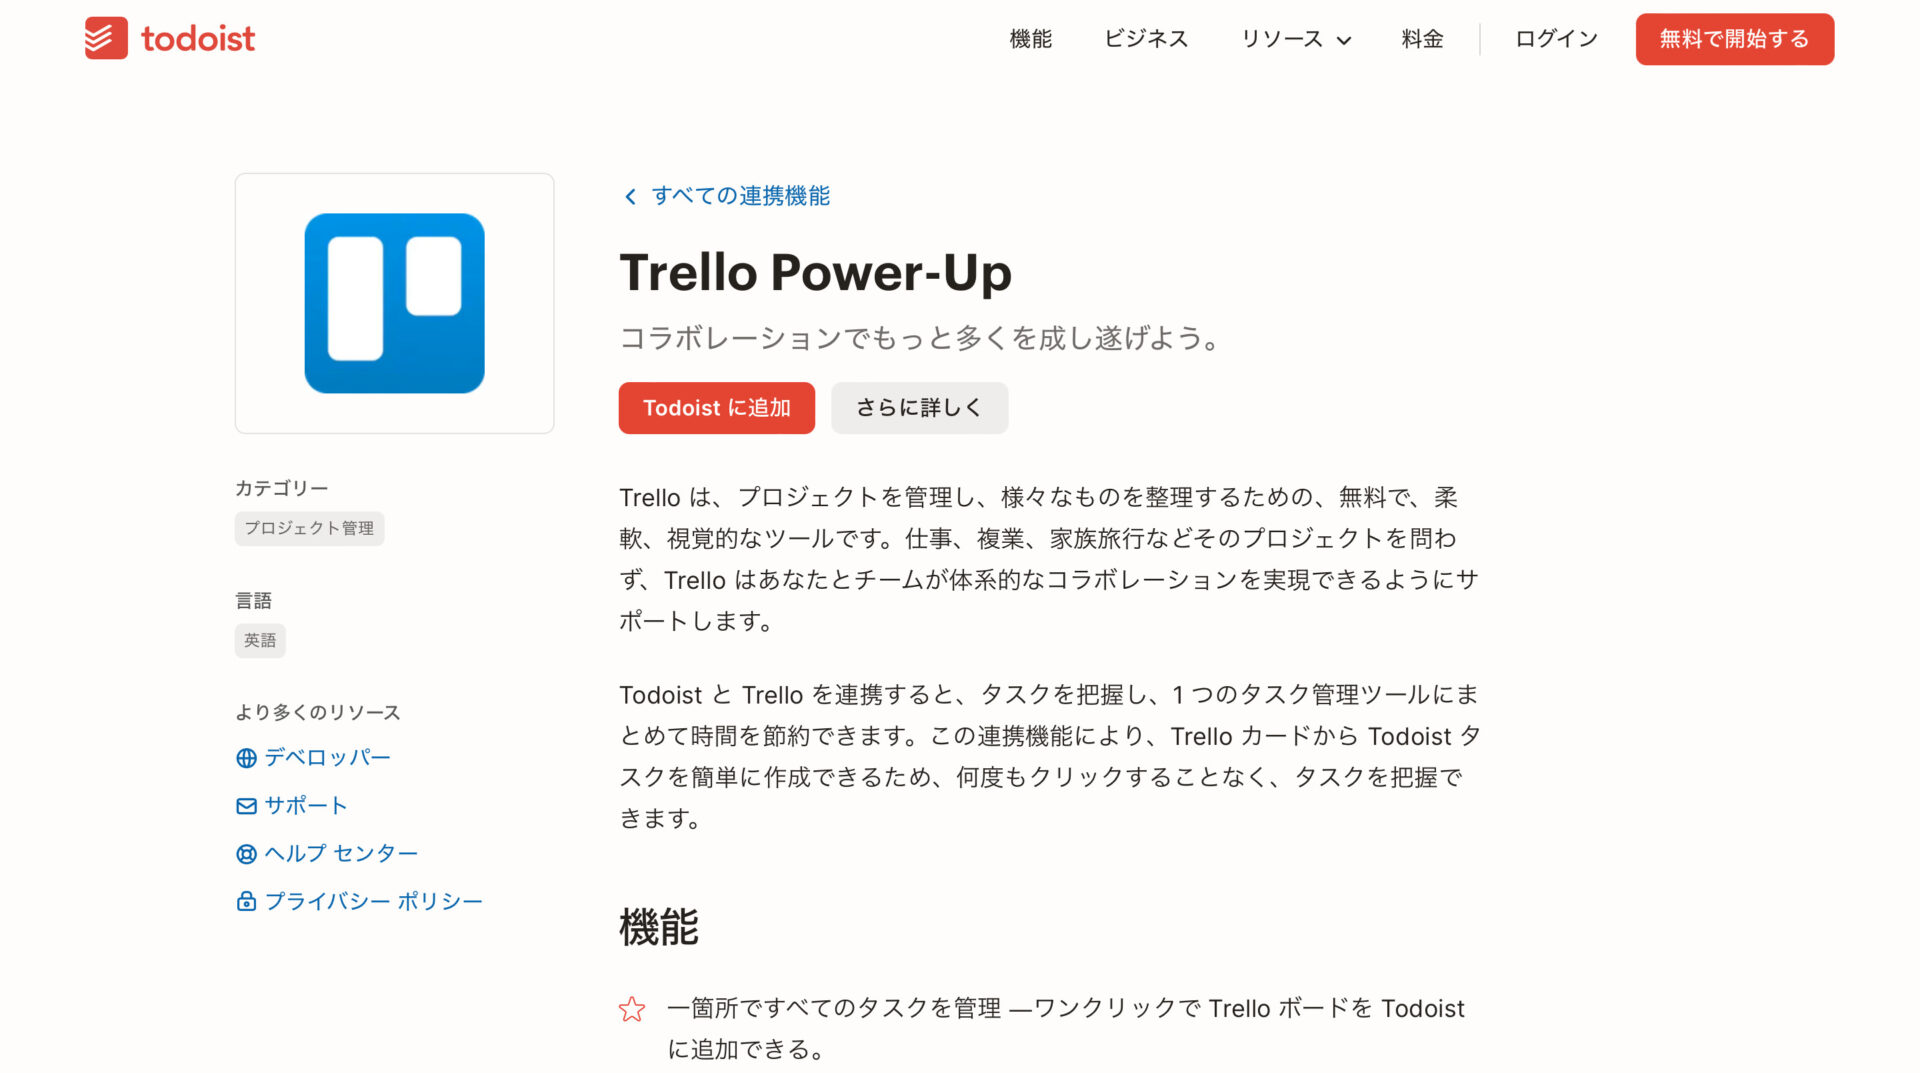 TodoistとTrello Power-Upの連携を紹介する画面